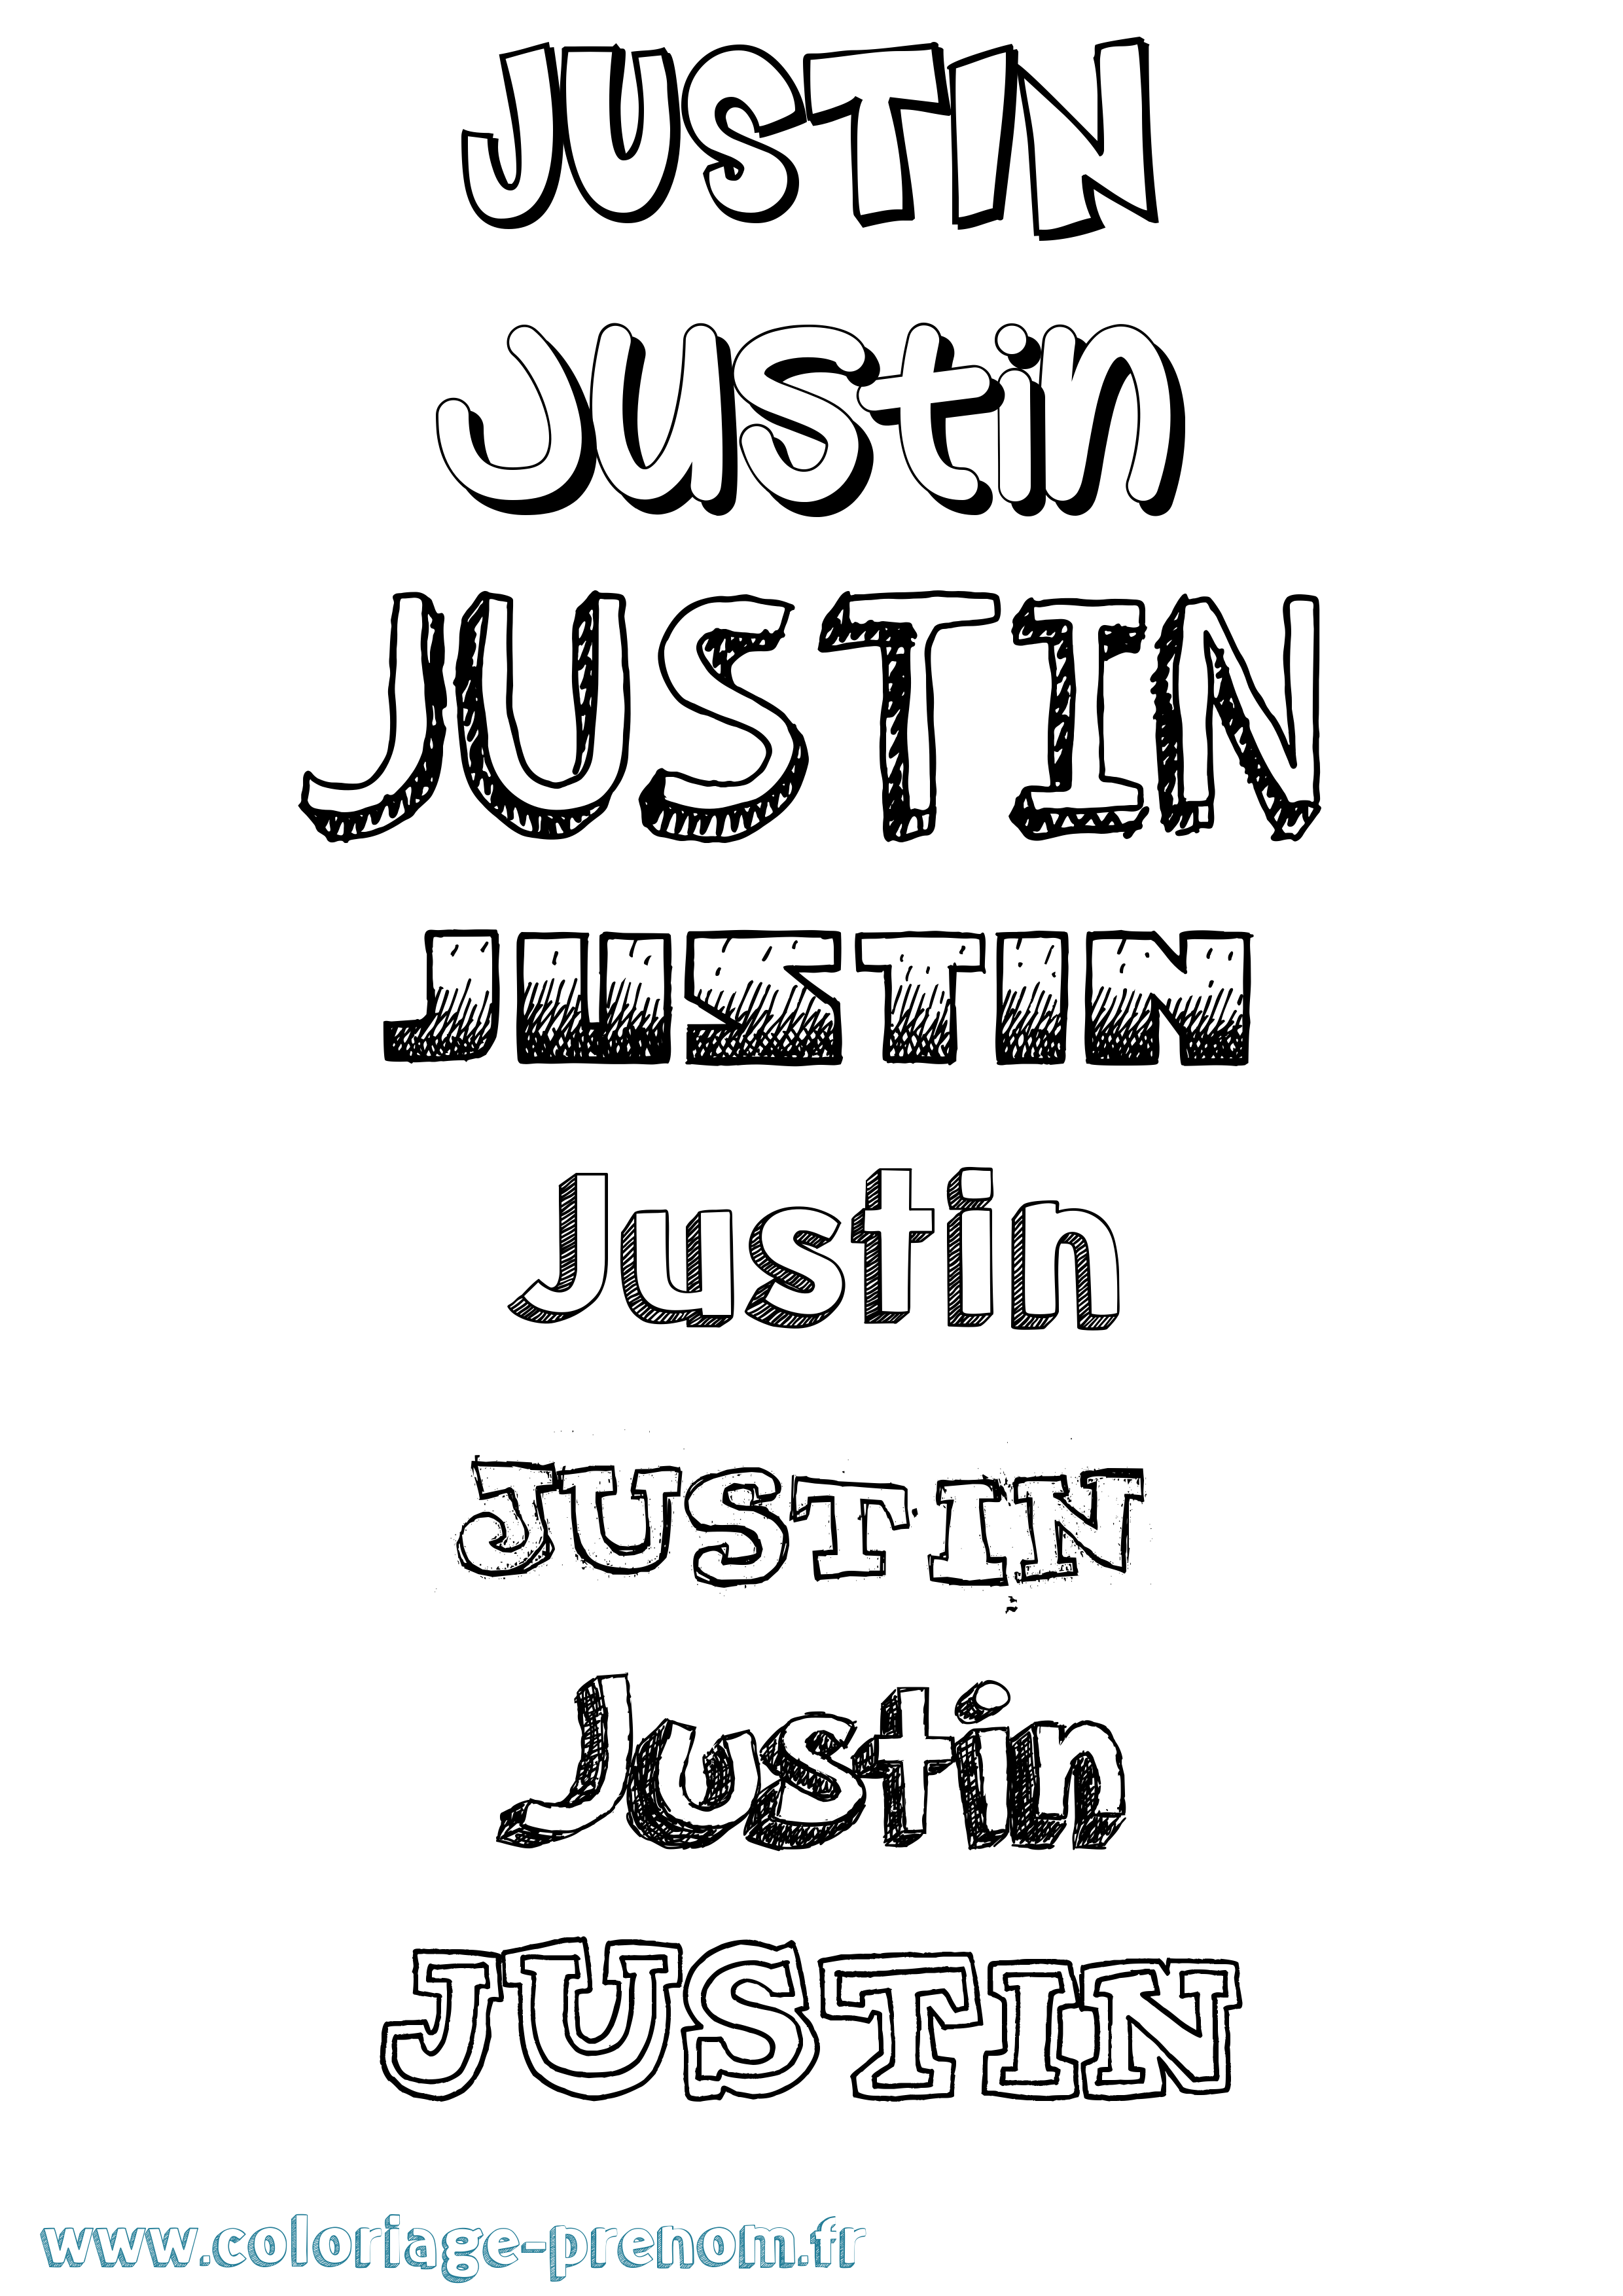 Coloriage prénom Justin